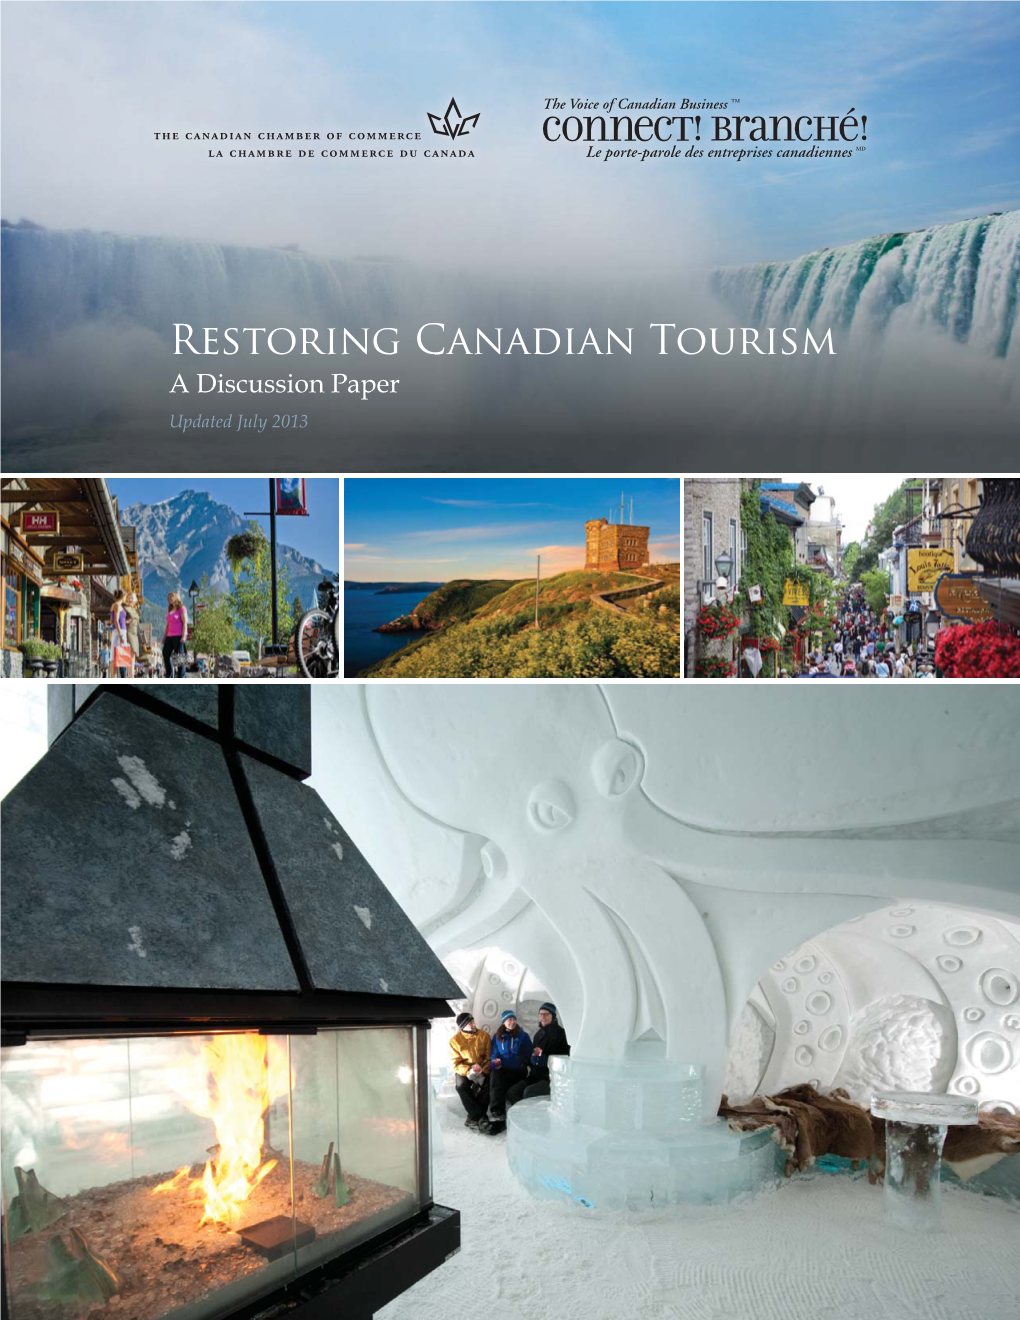 Restoring Canadian Tourism, a Discussion Paper